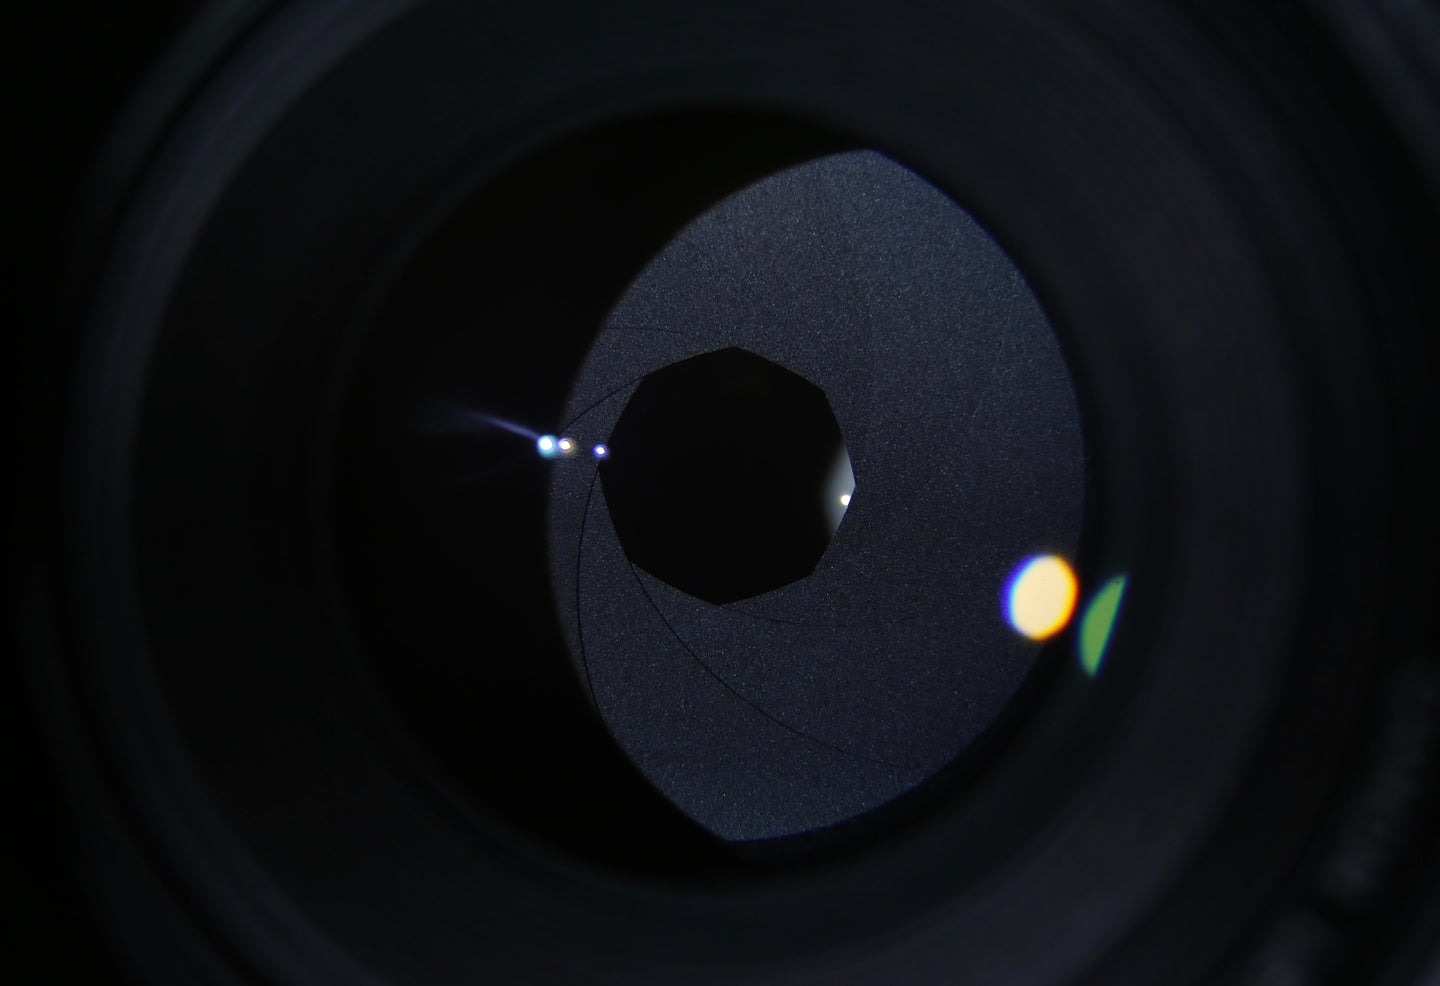 closeup of a camera lens